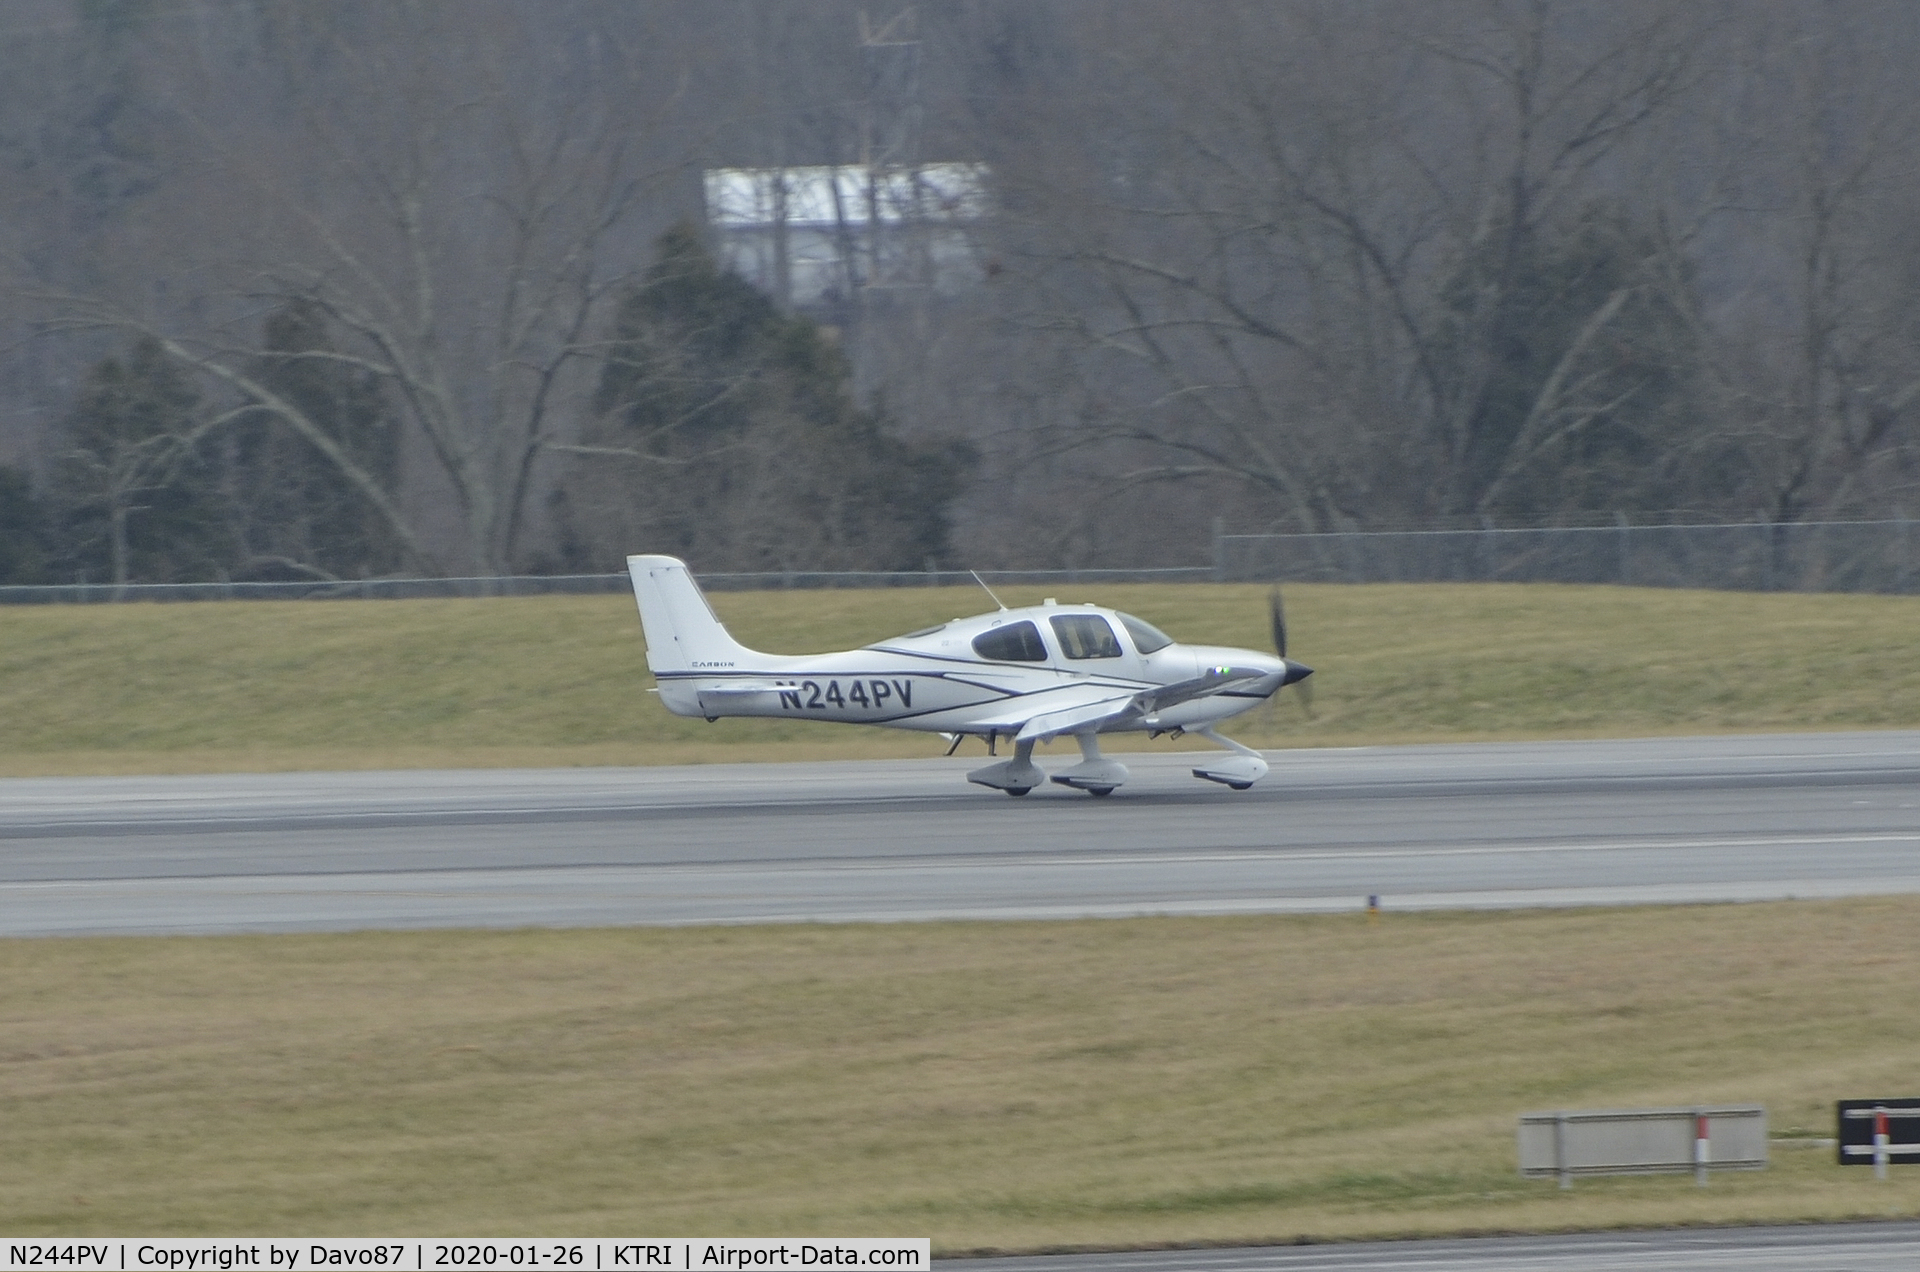 N244PV, 2016 Cirrus SR22 C/N 4392, Landing at Tri-Cities Airport (KTRI) in East Tennessee.